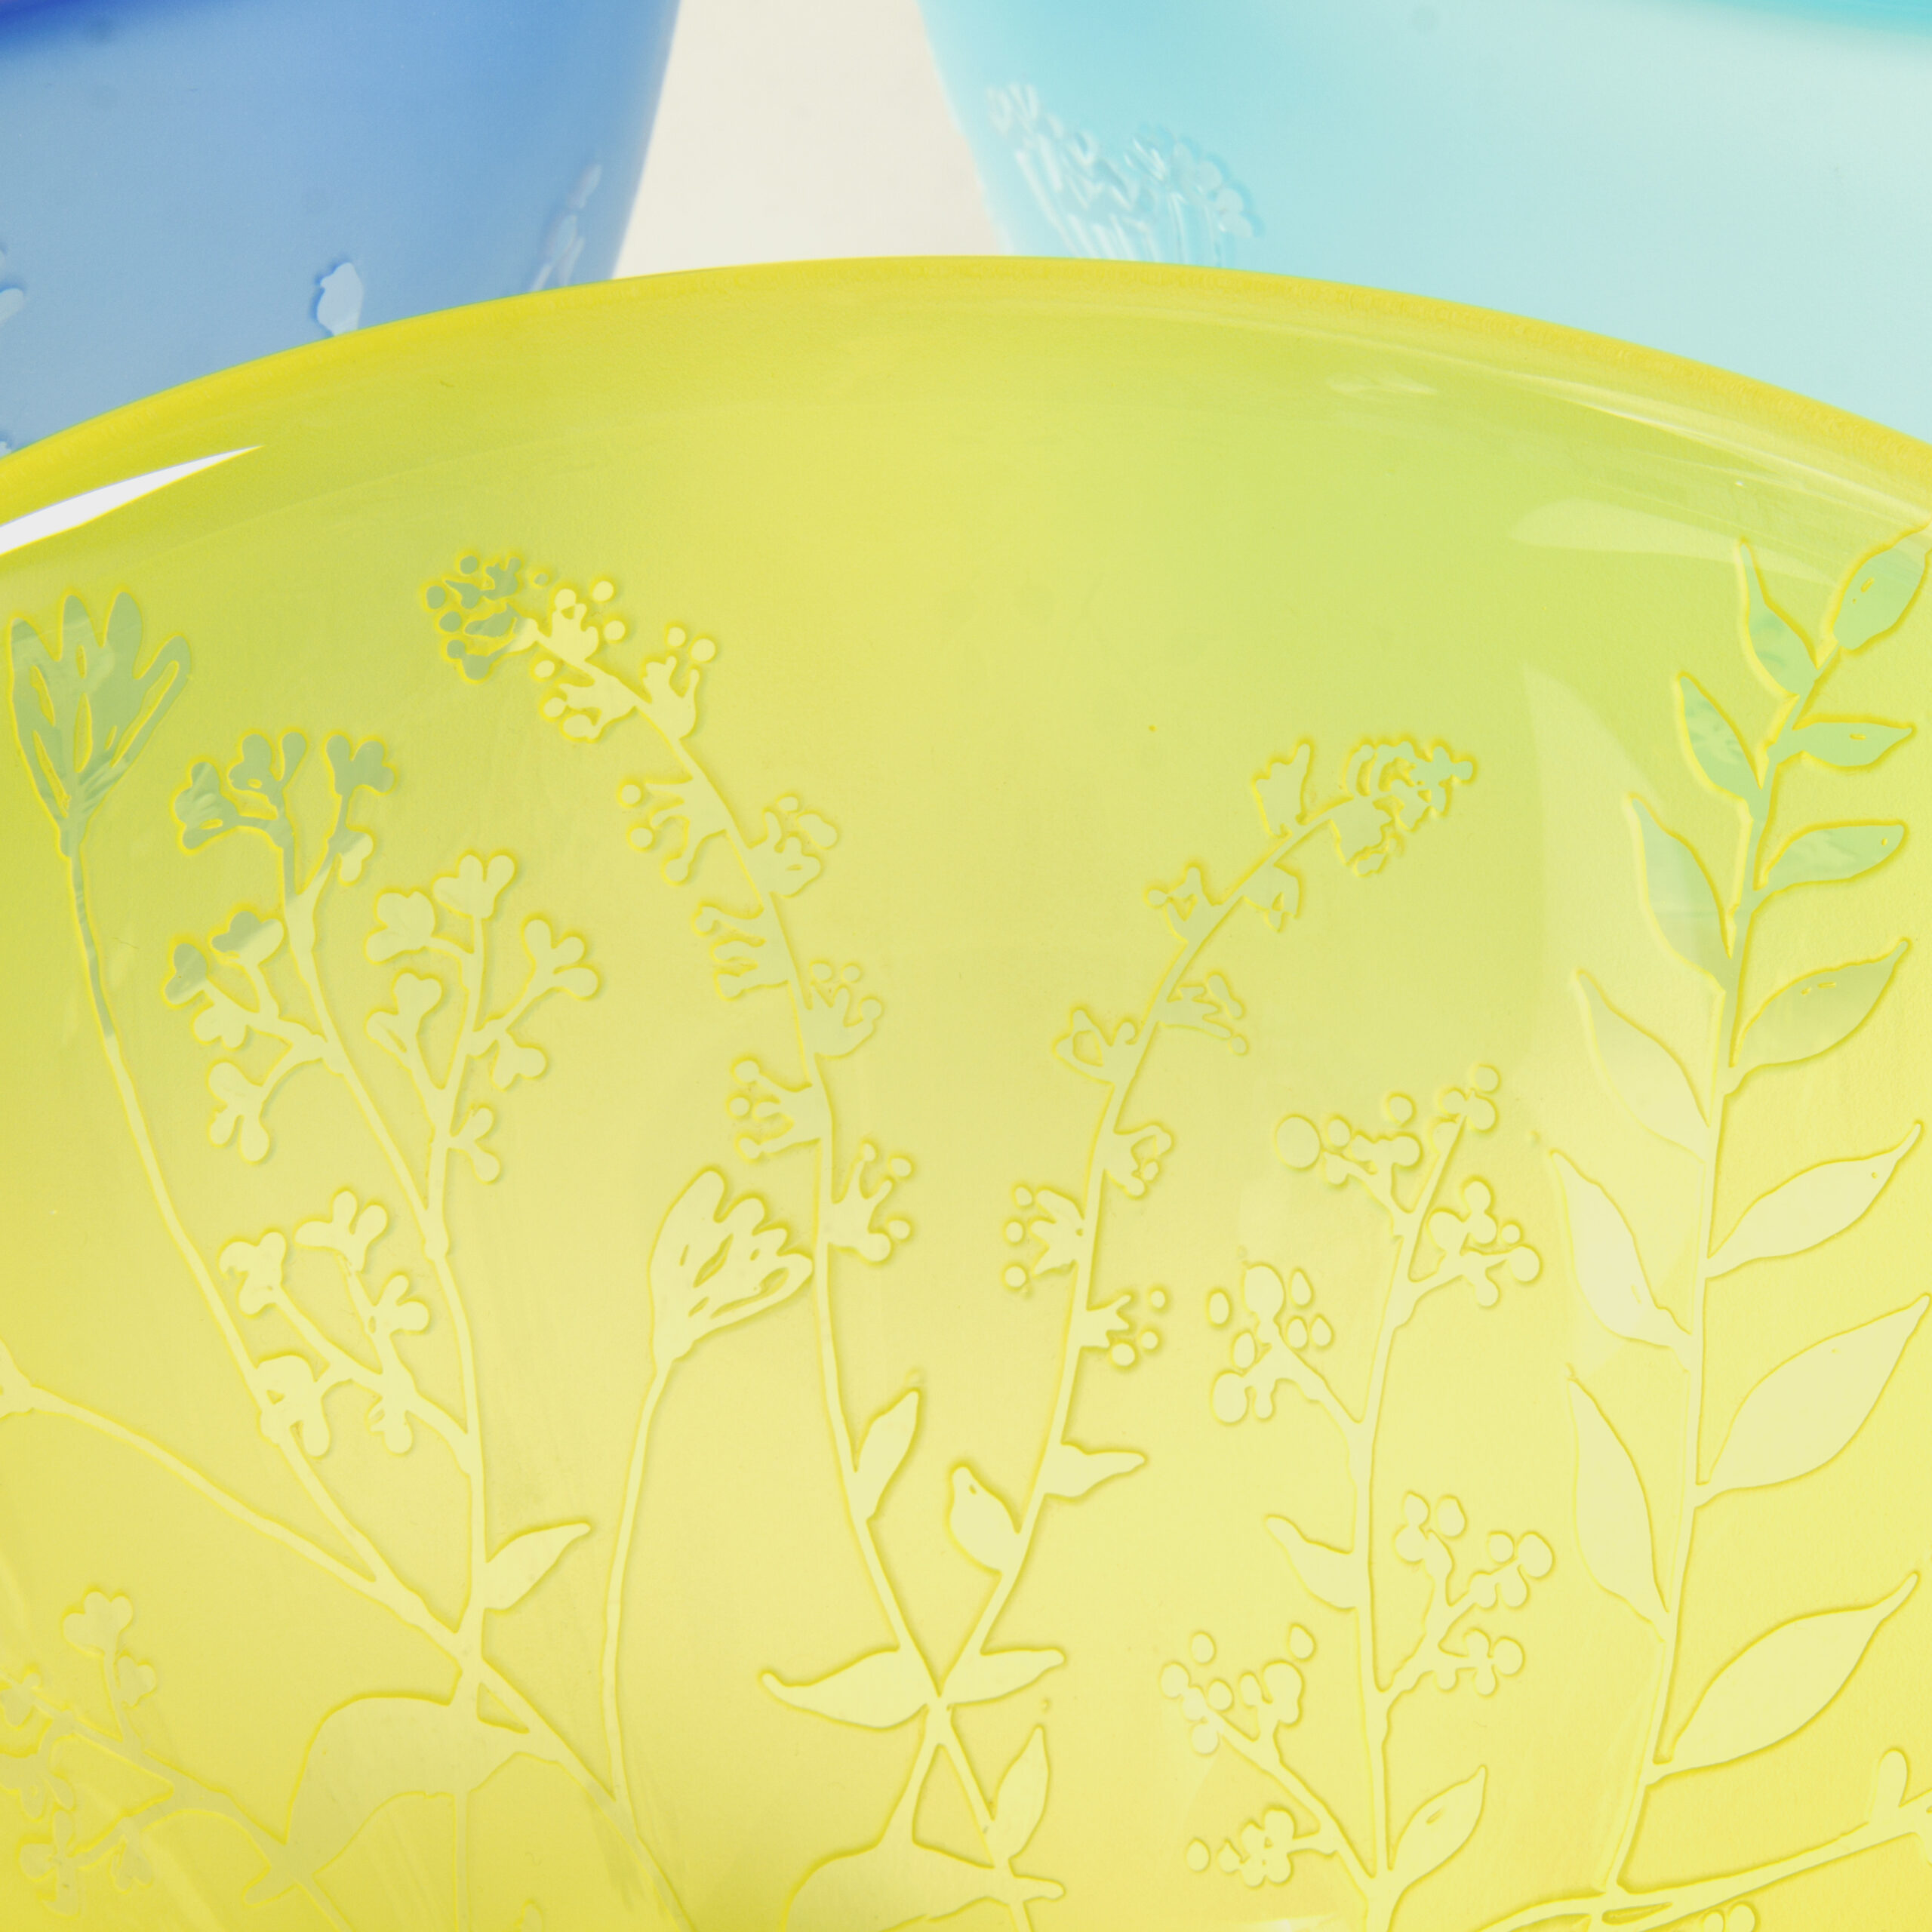 Carol Nesbitt: Yellow Bowl with Wildflowers Product Image 2 of 4